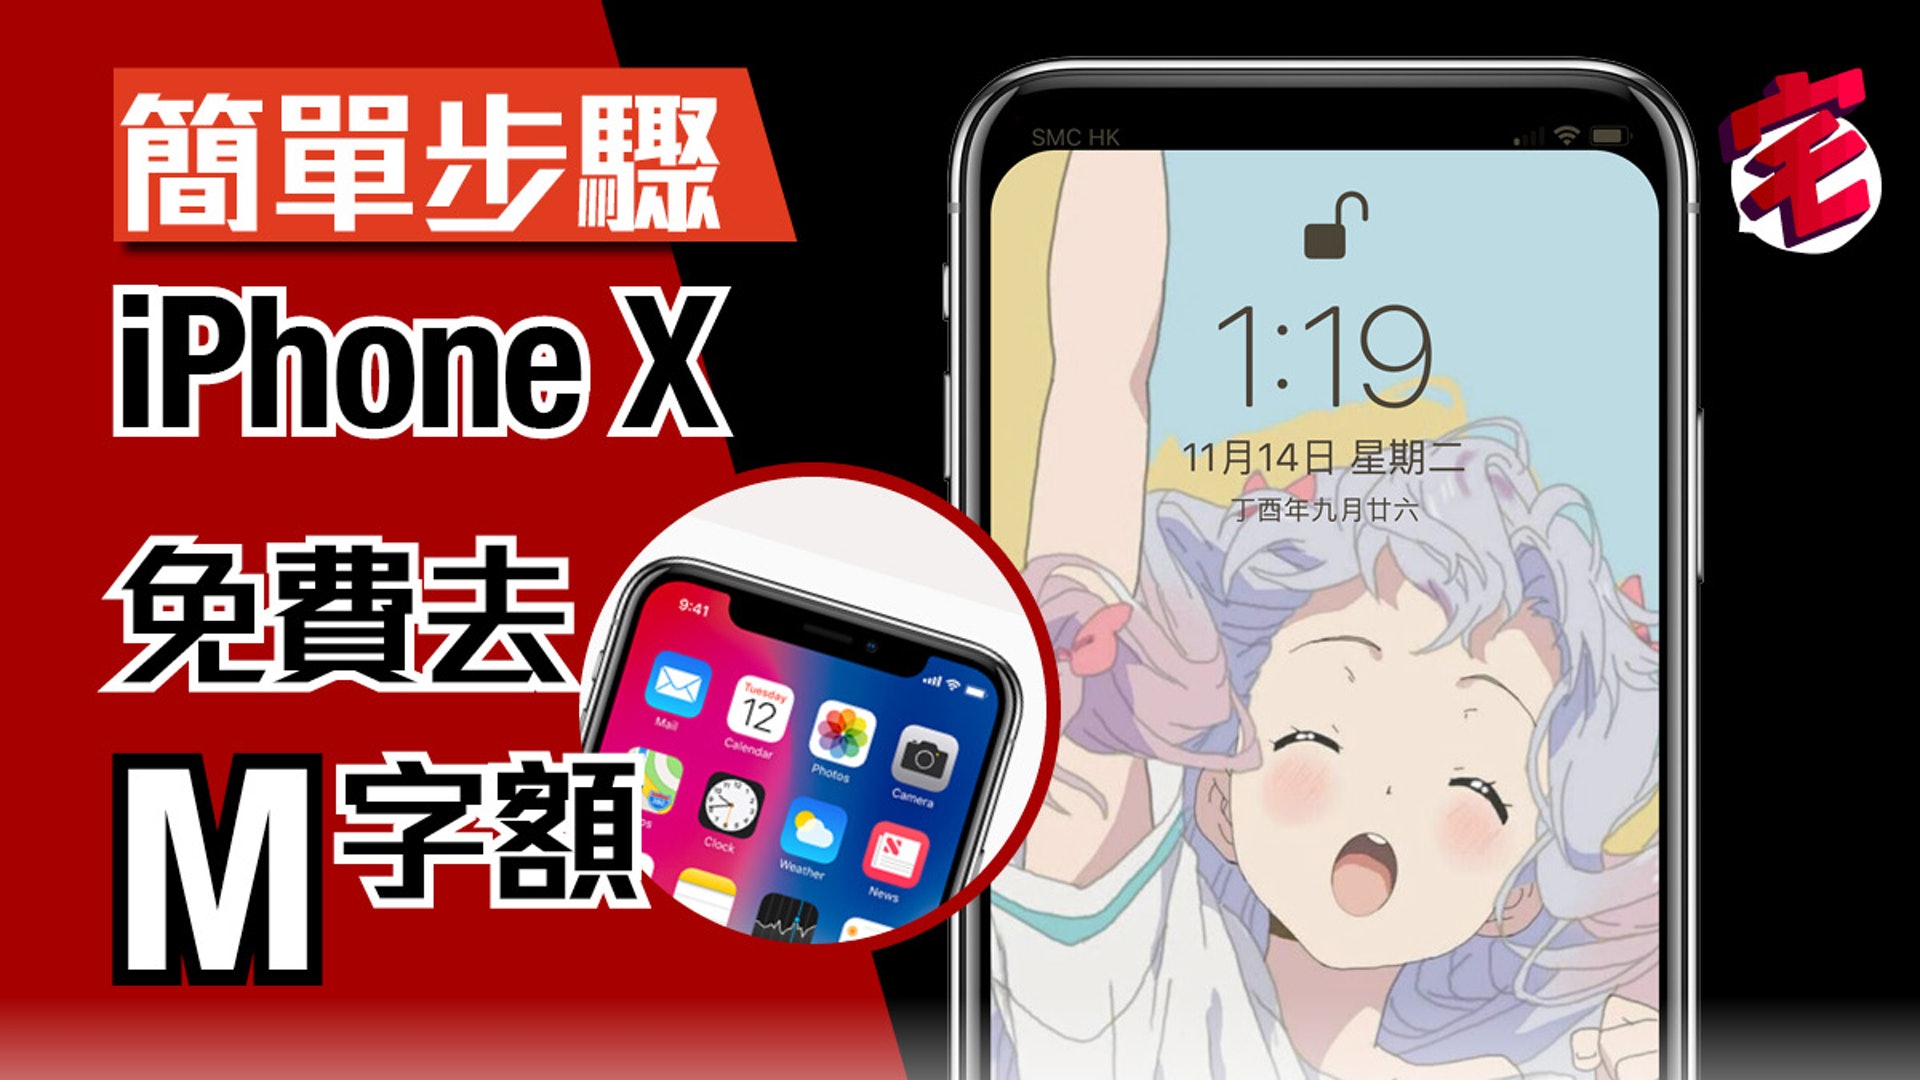 Iphone X隱藏m字額 一鍵完成 唔洗俾錢買app搞 香港01 數碼生活